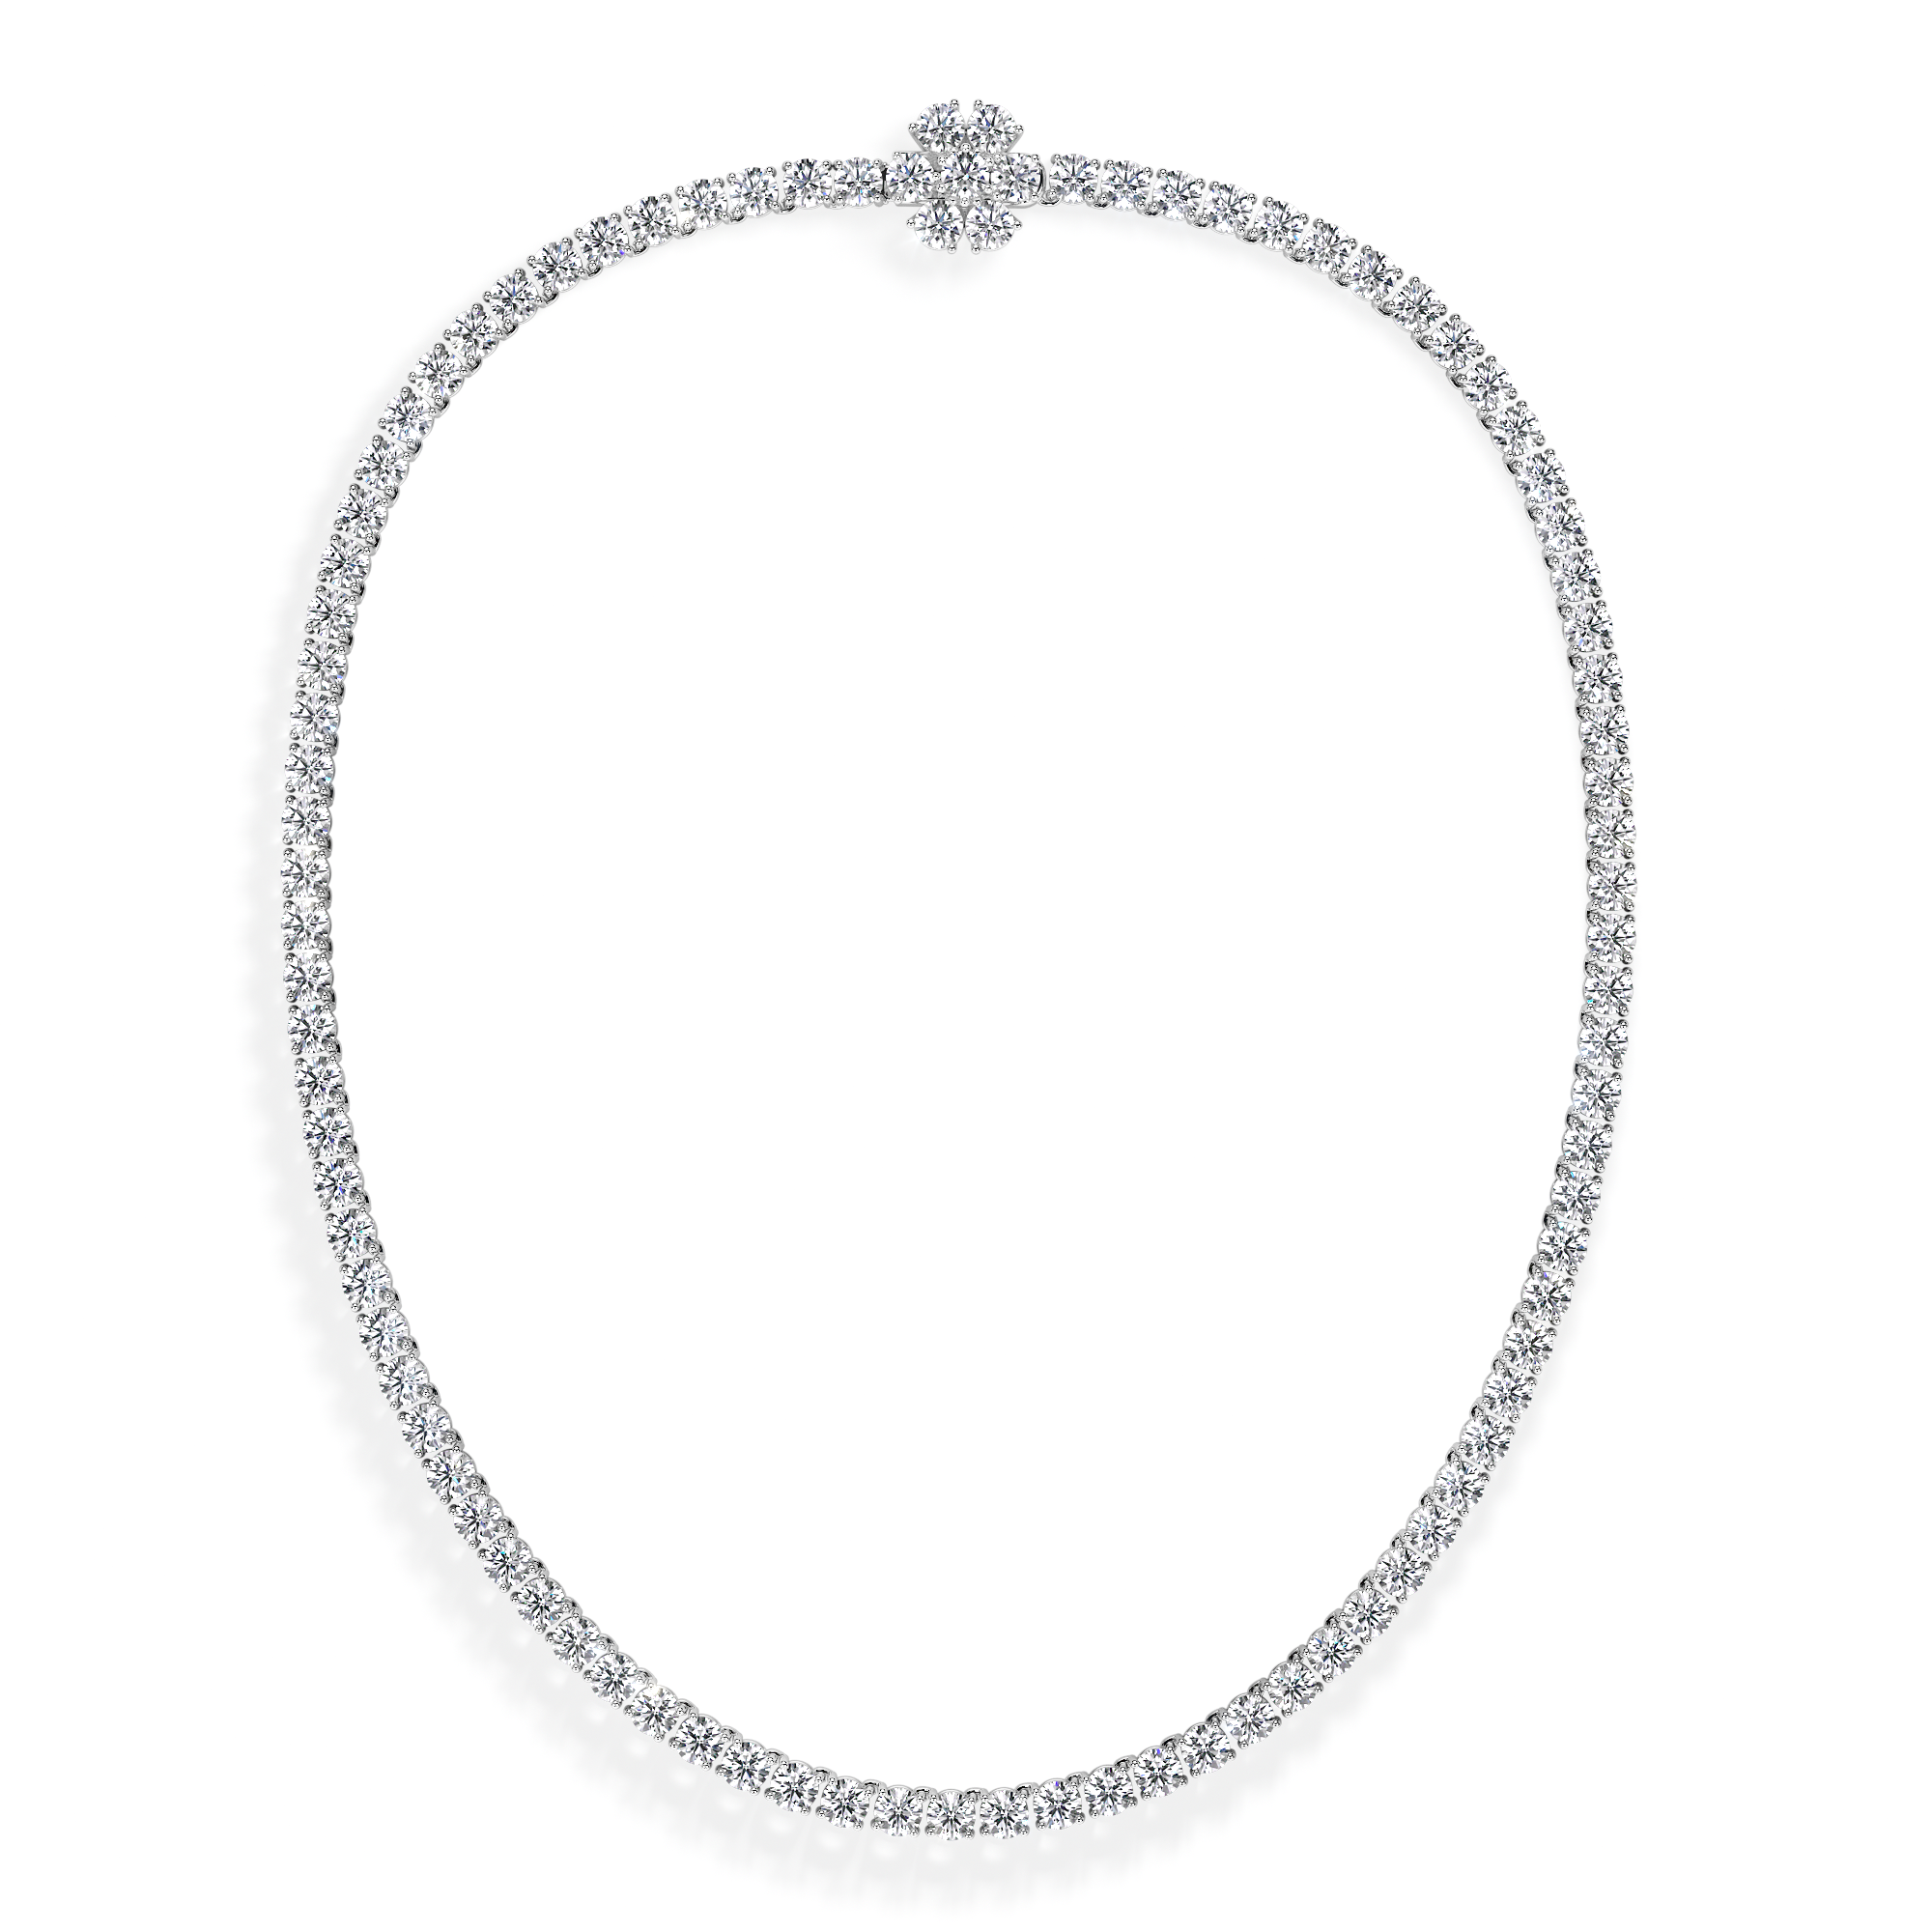 18 k white gold Tennis Necklace, with 23.50 CT white diamonds